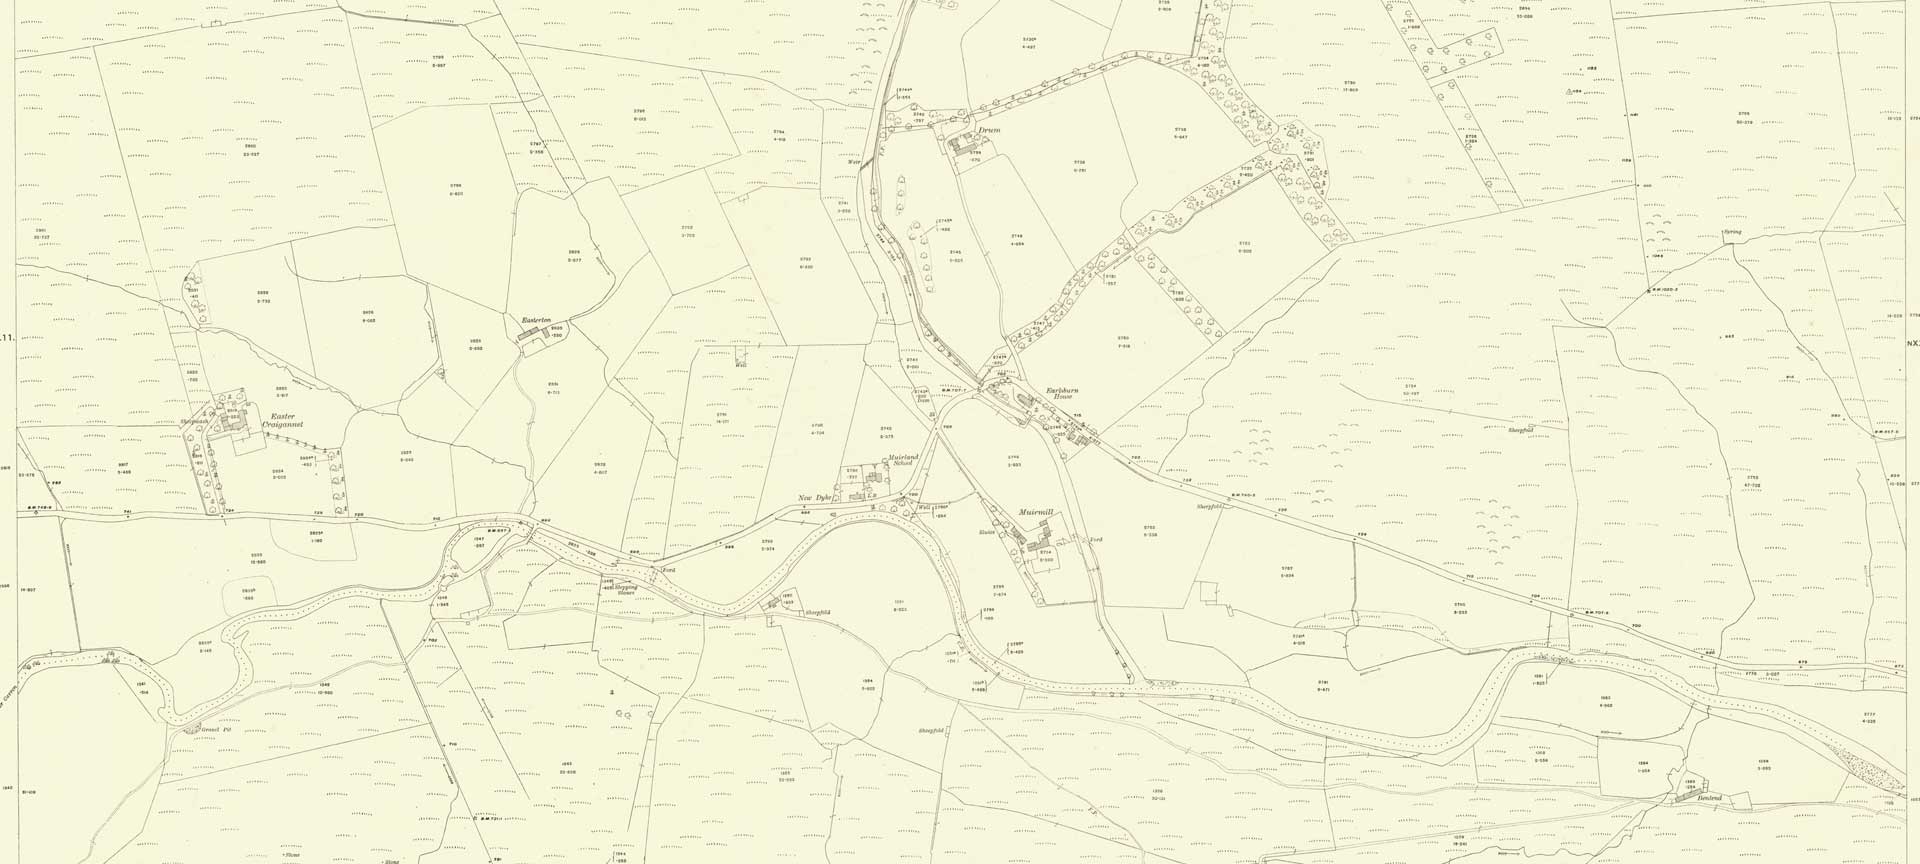 <p>1917 Ordnance Survey Map</p>
